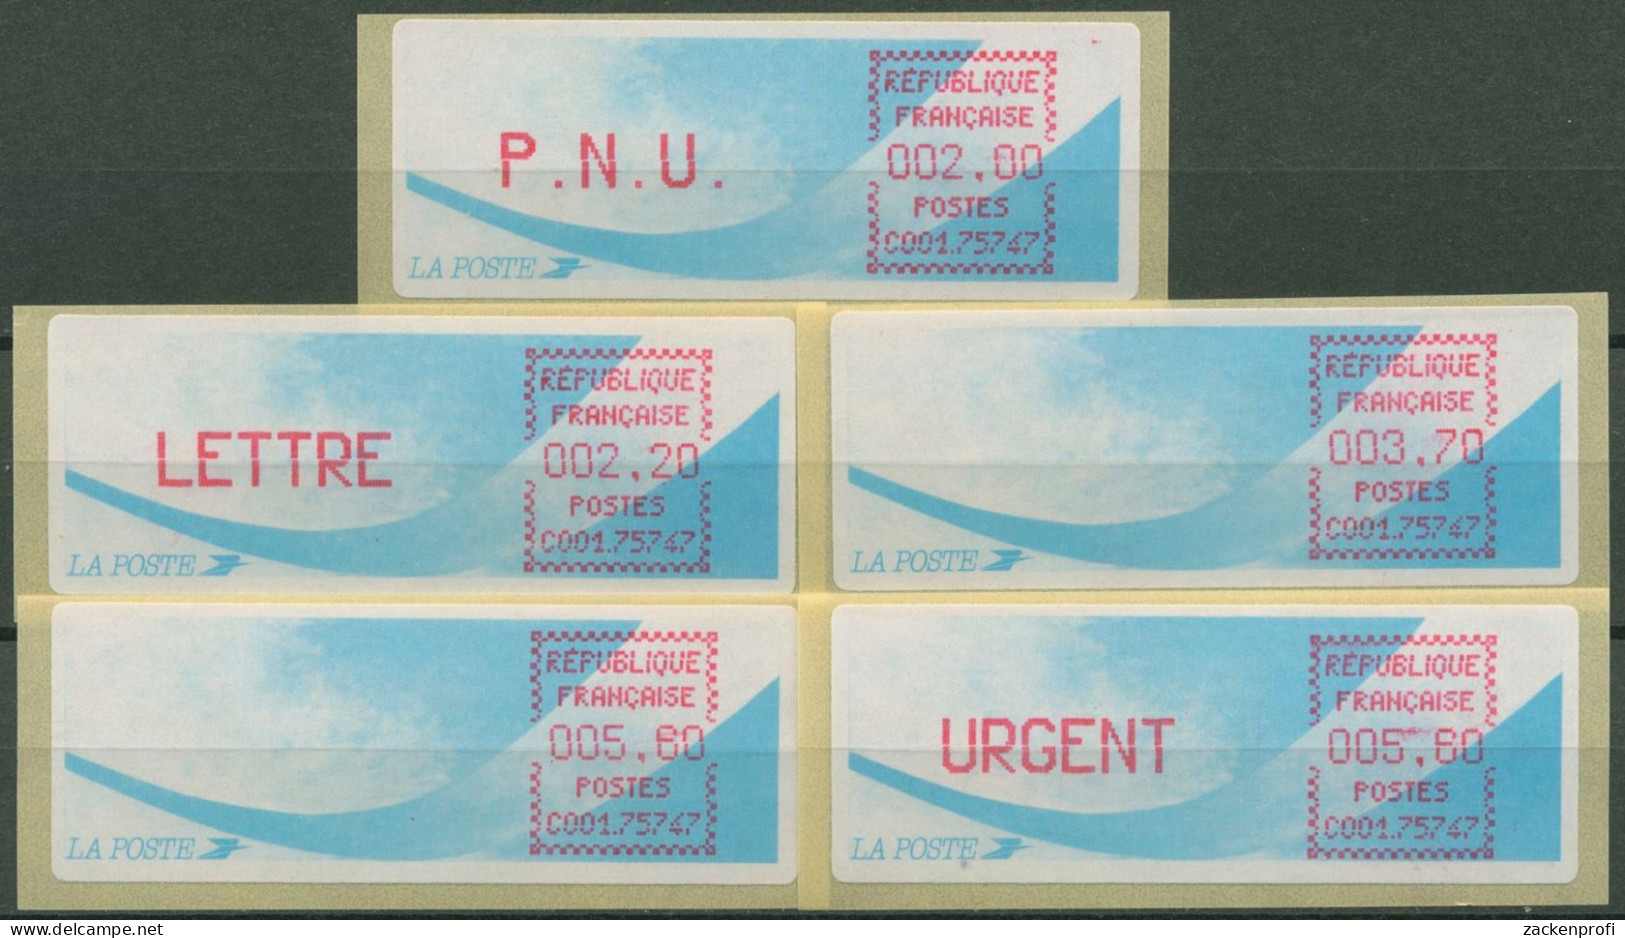 Frankreich ATM 1988 Satz 2,00/2,20/3,70/5,60/5,60 ATM 9.10 B PS 1 Postfrisch - 1985 « Carrier » Paper